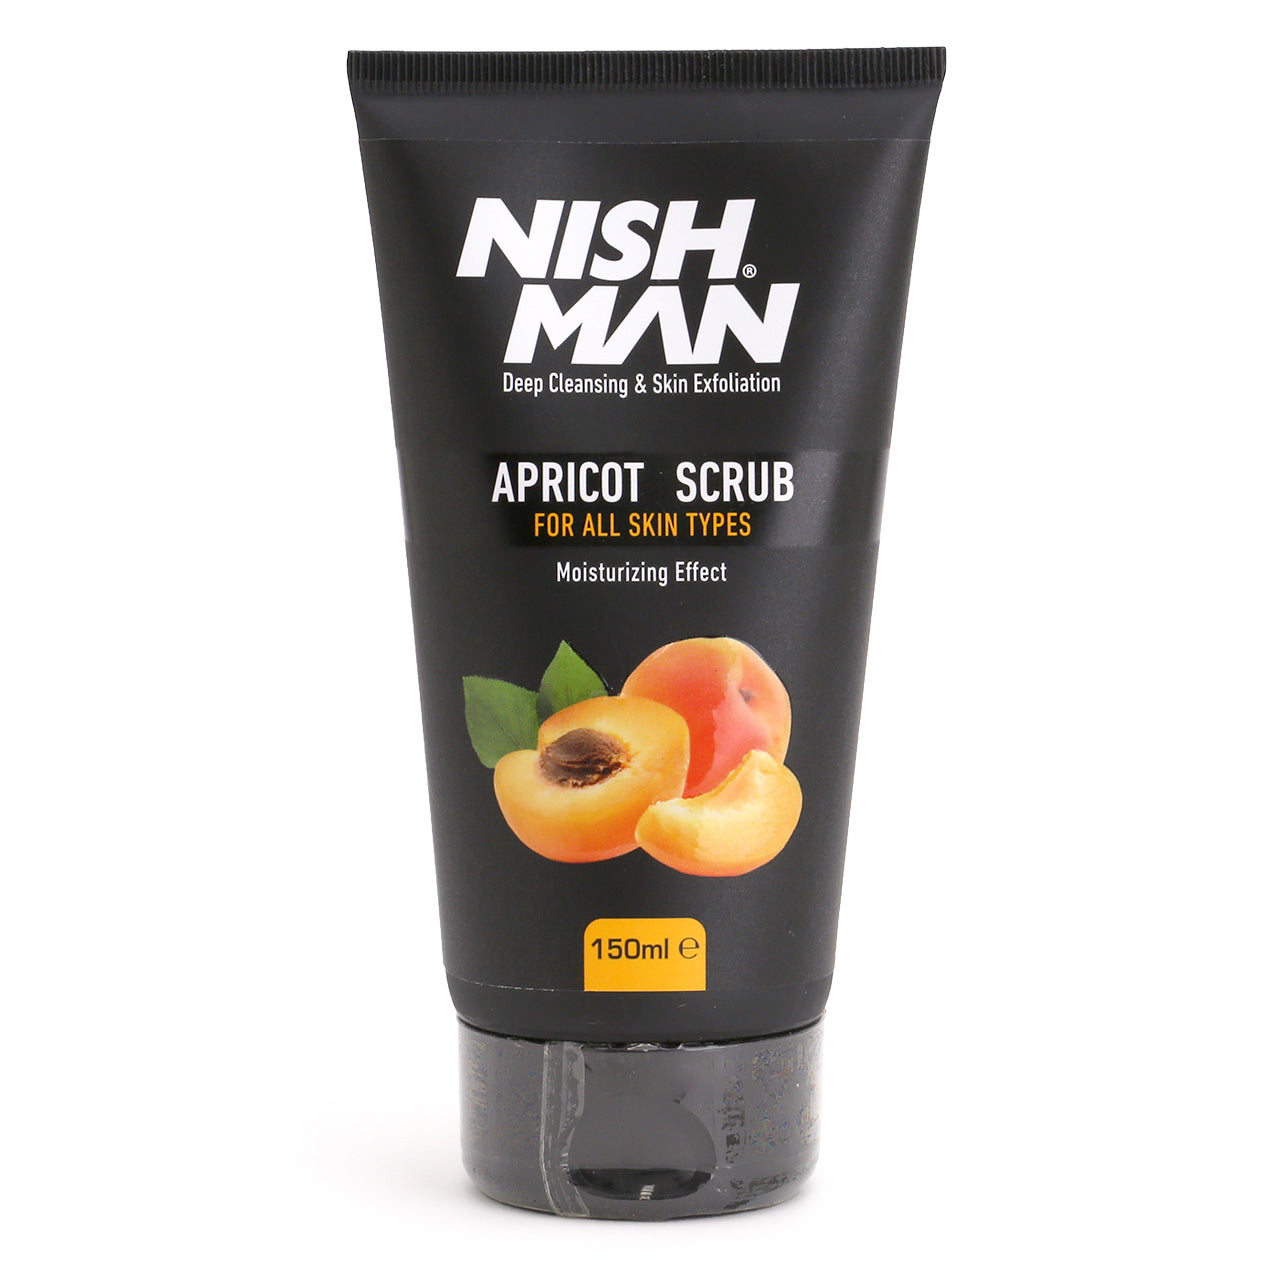 NishMan Apricot Face Scrub tube, 150ml